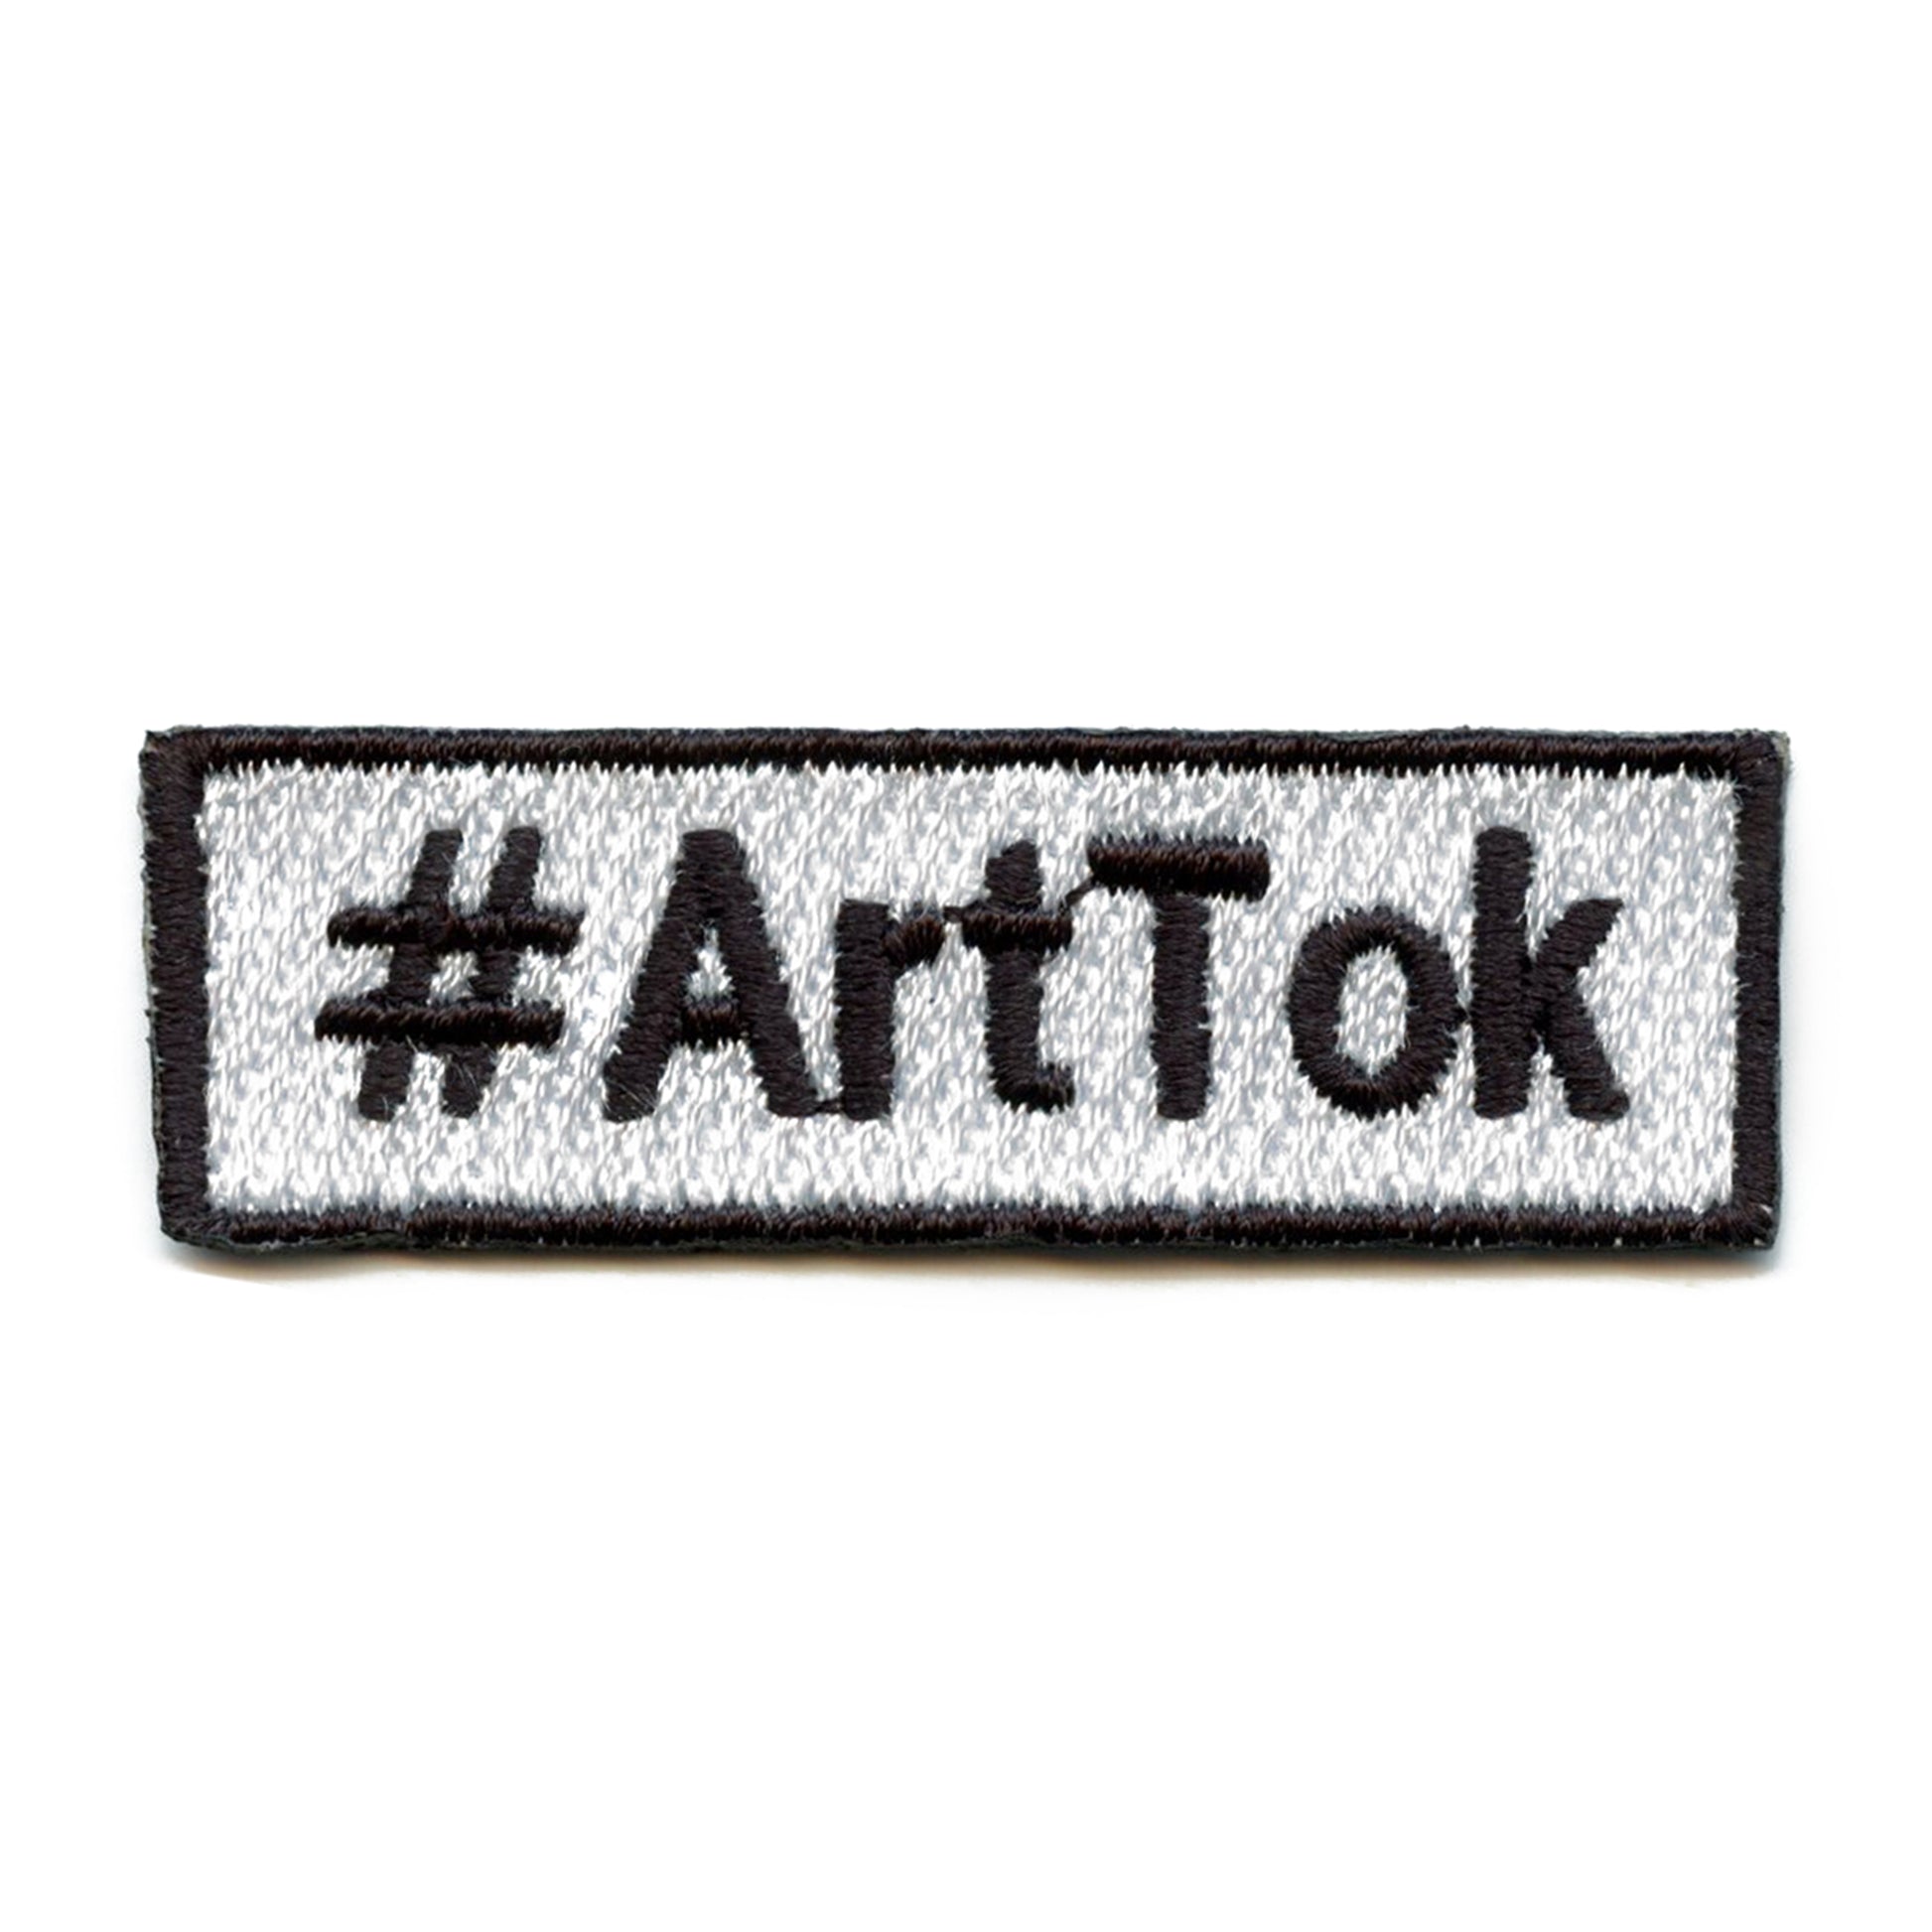 #ArtTok Patch Popular Hashtag Embroidered Iron On 